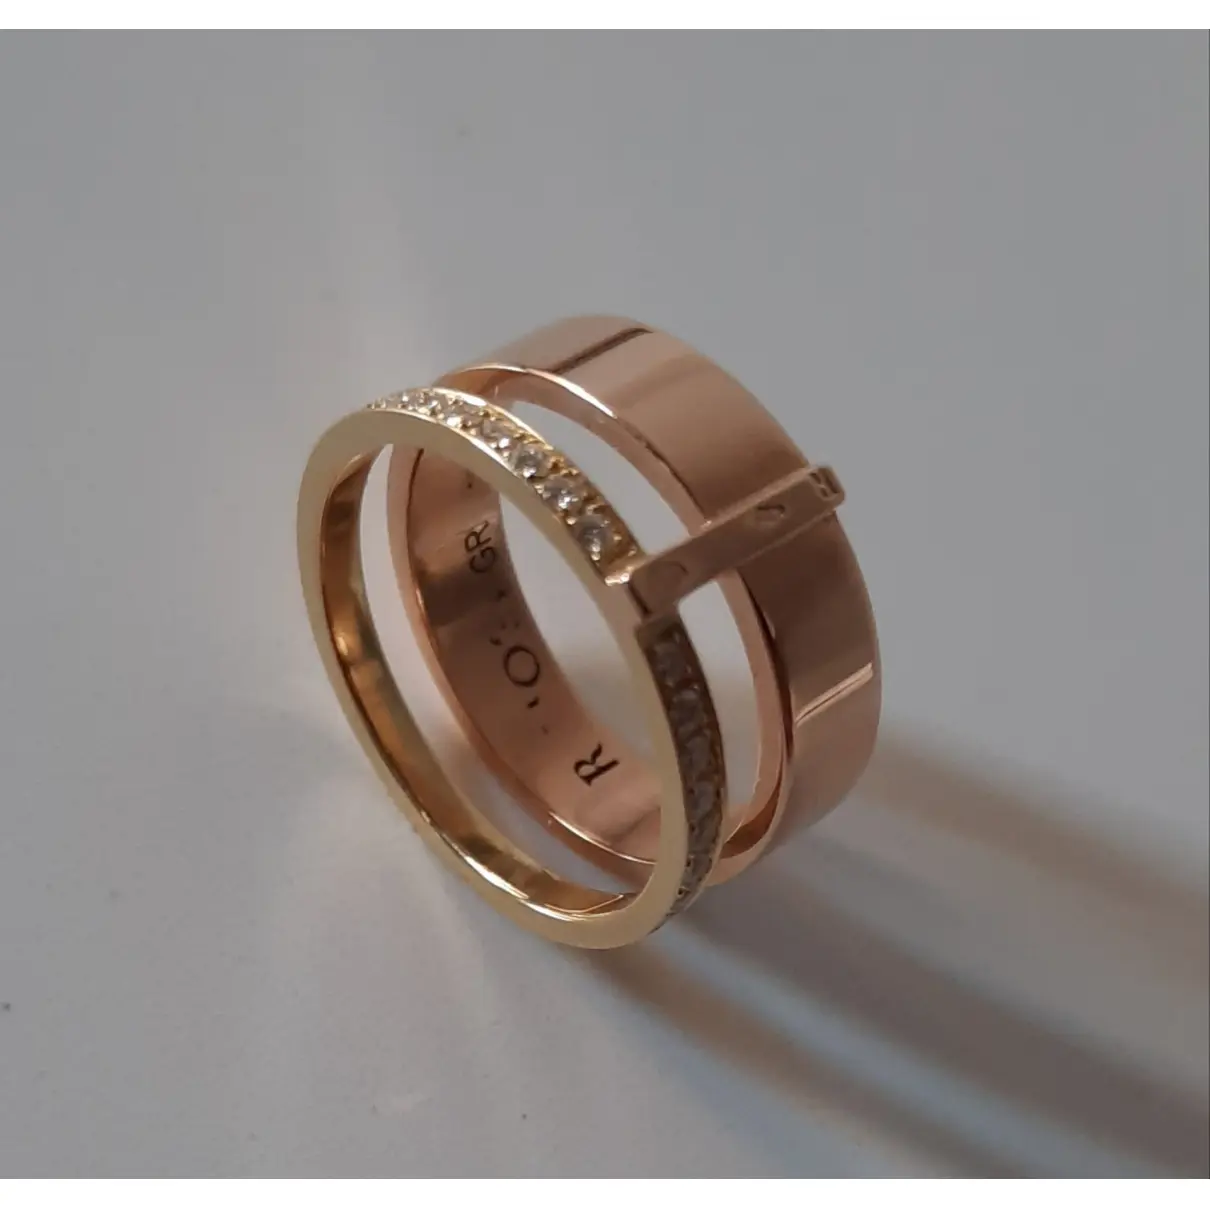 Buy Repossi Berbère pink gold ring online